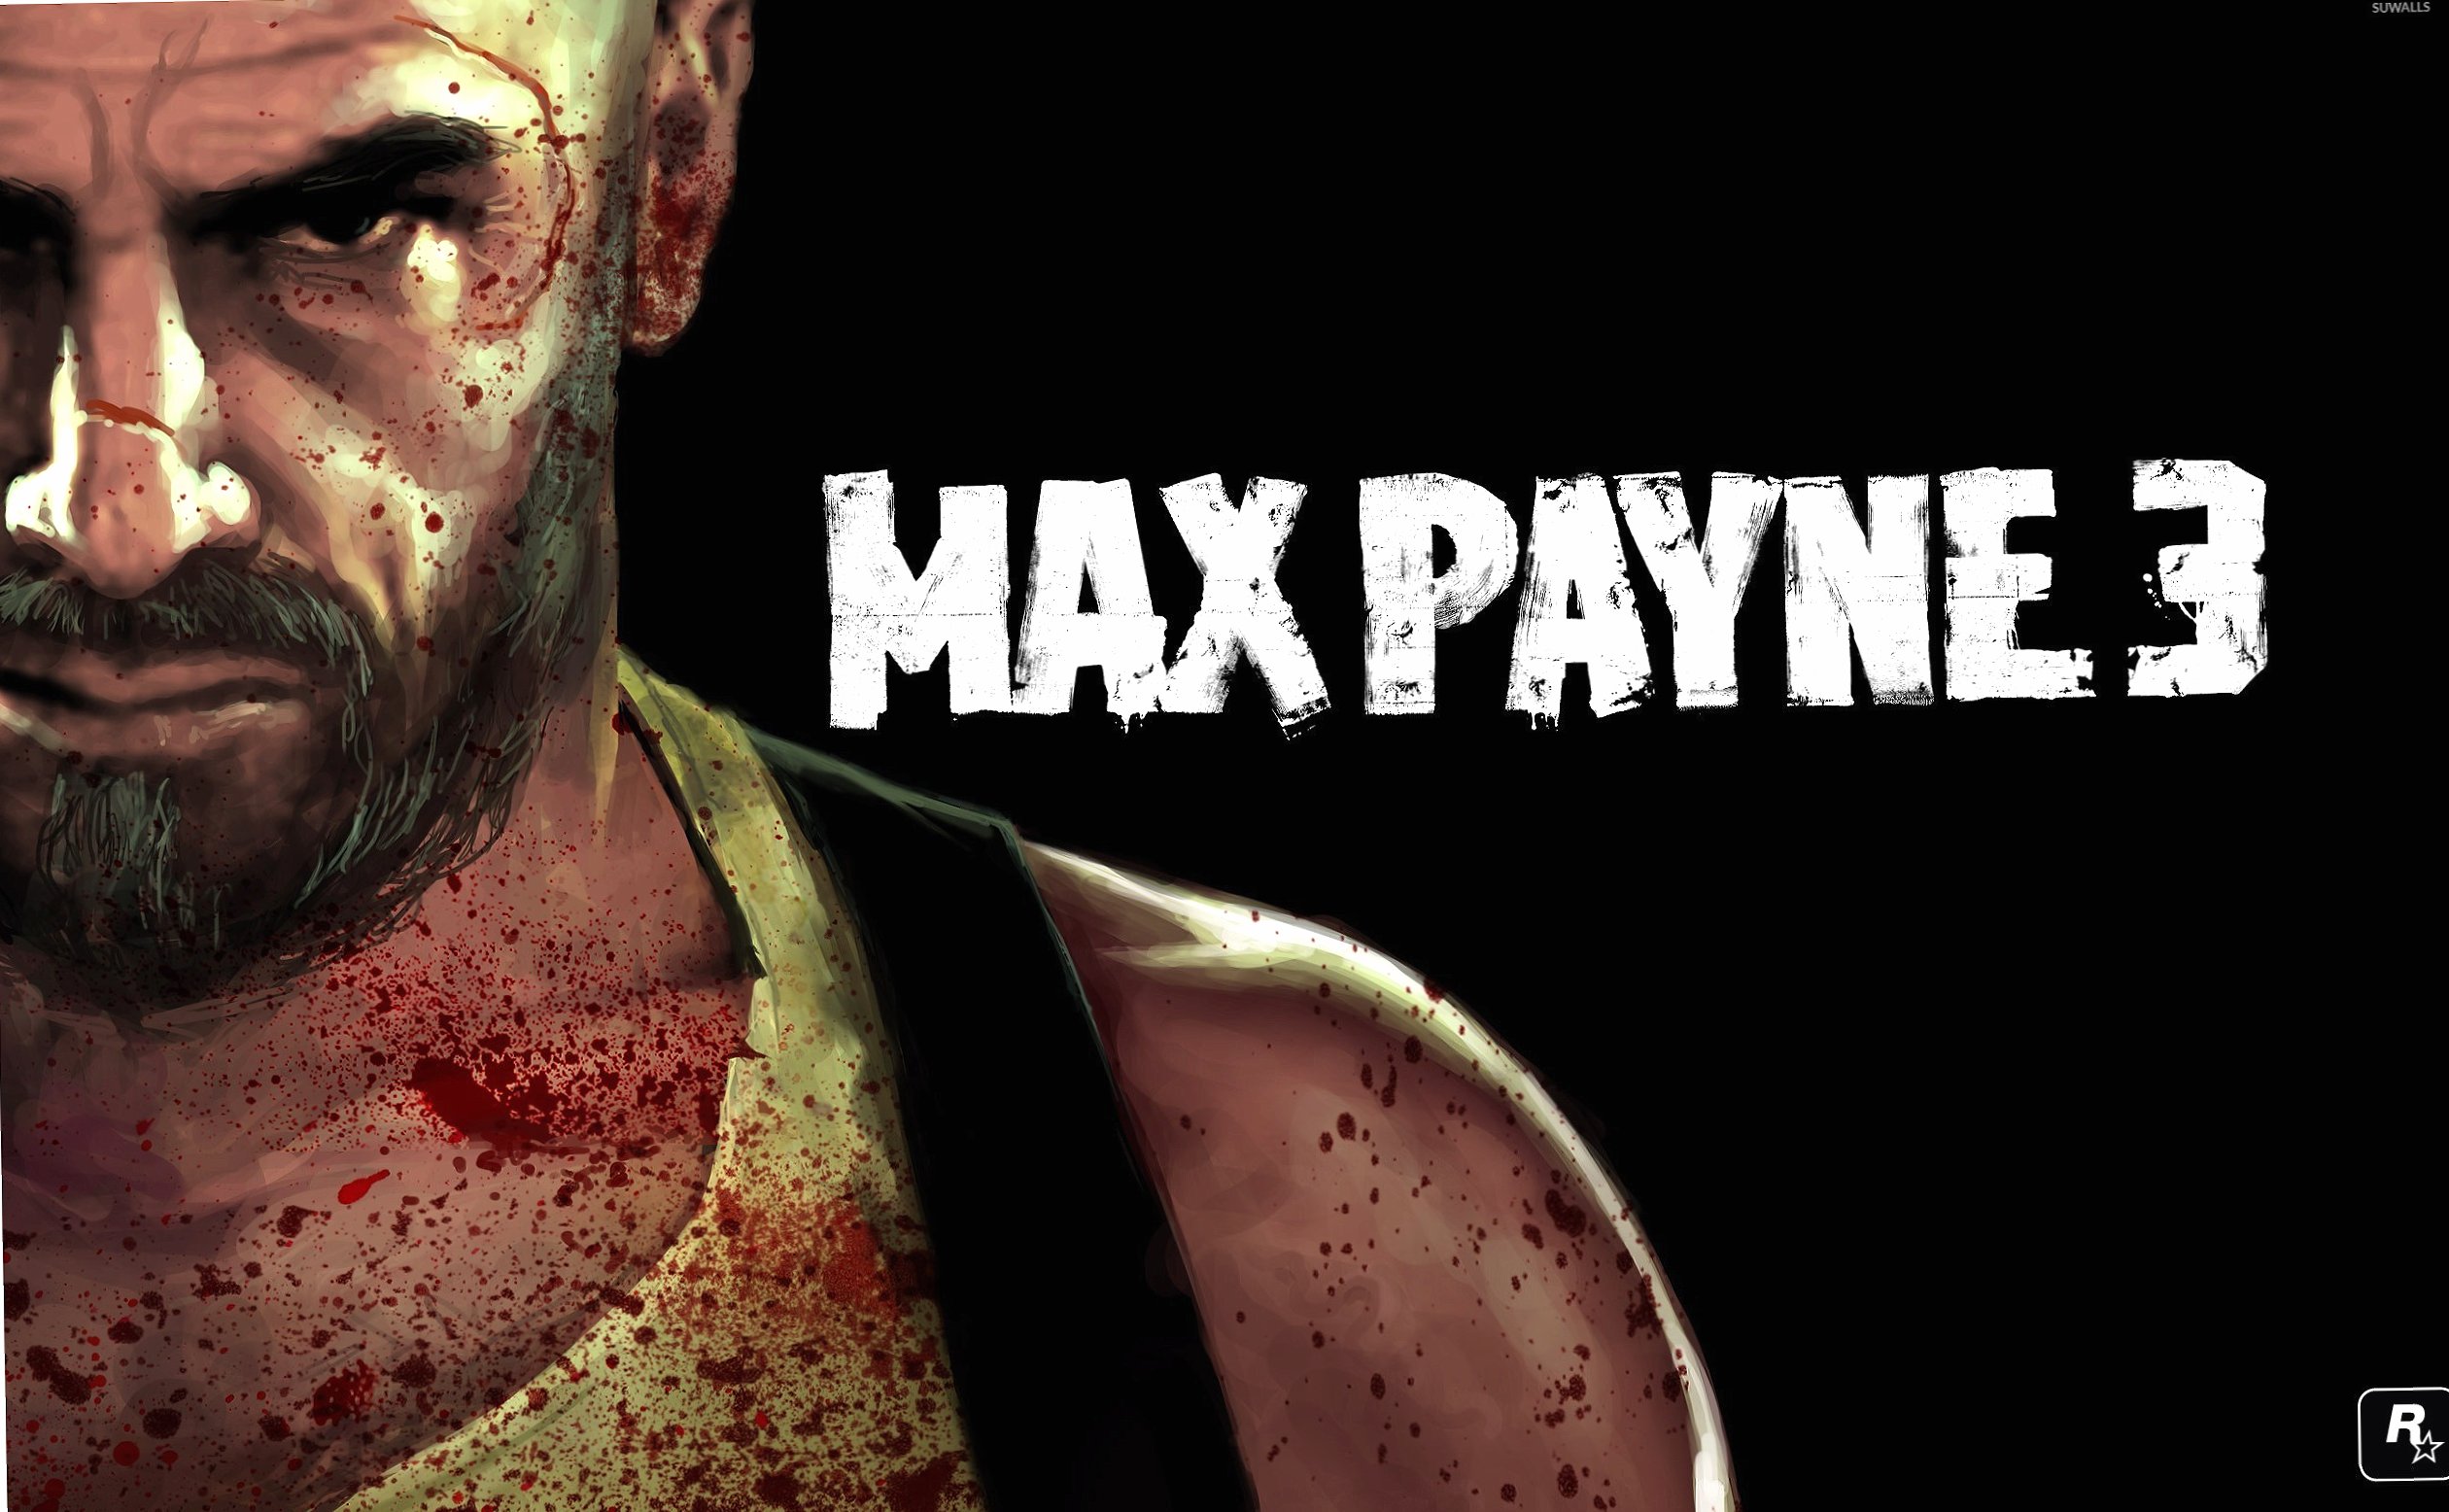 Max Payne 3 hero at 1024 x 1024 iPad size wallpapers HD quality